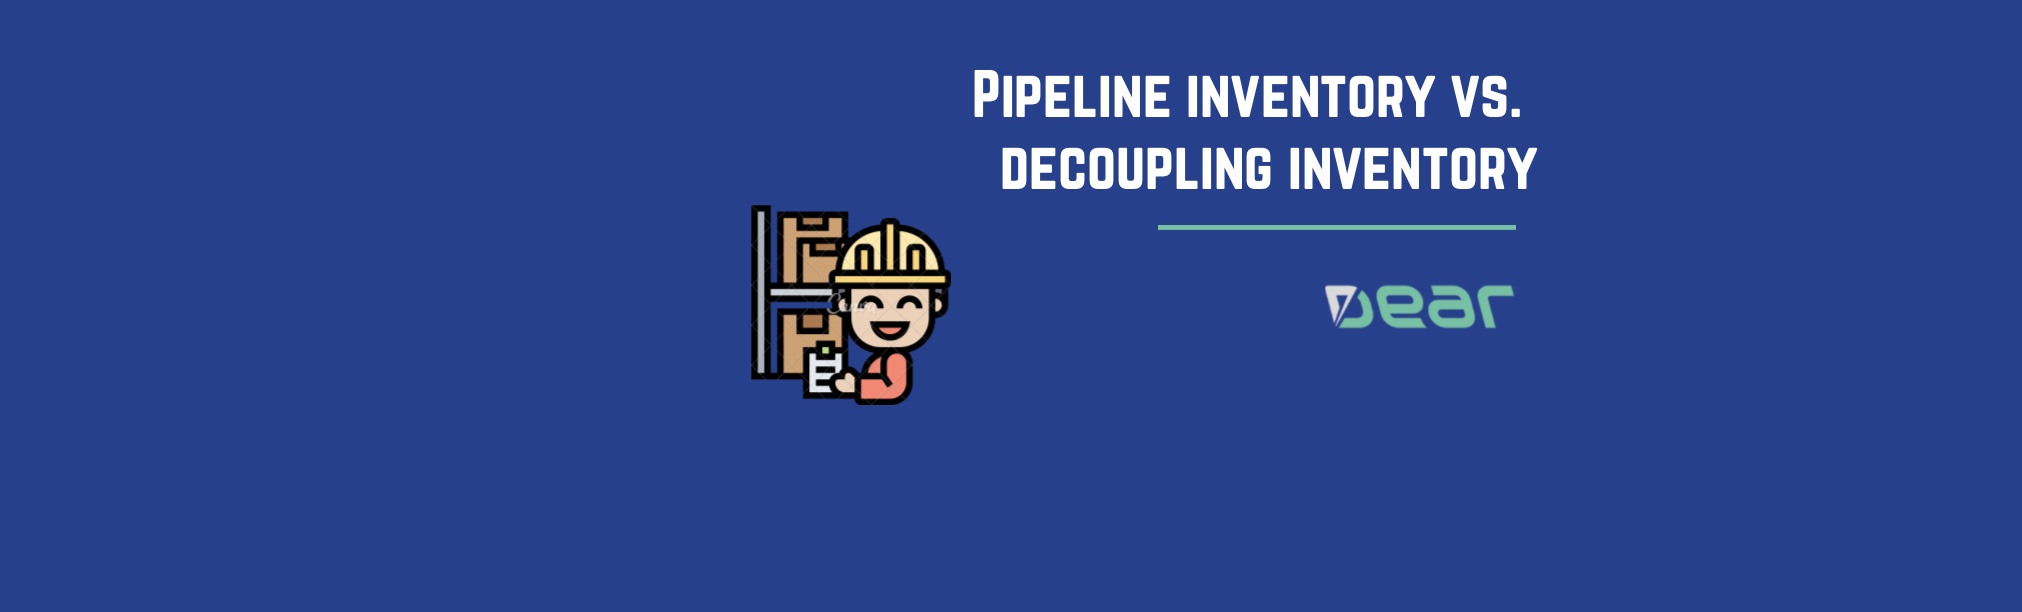 Pipeline Inventory Decoupling Inventory